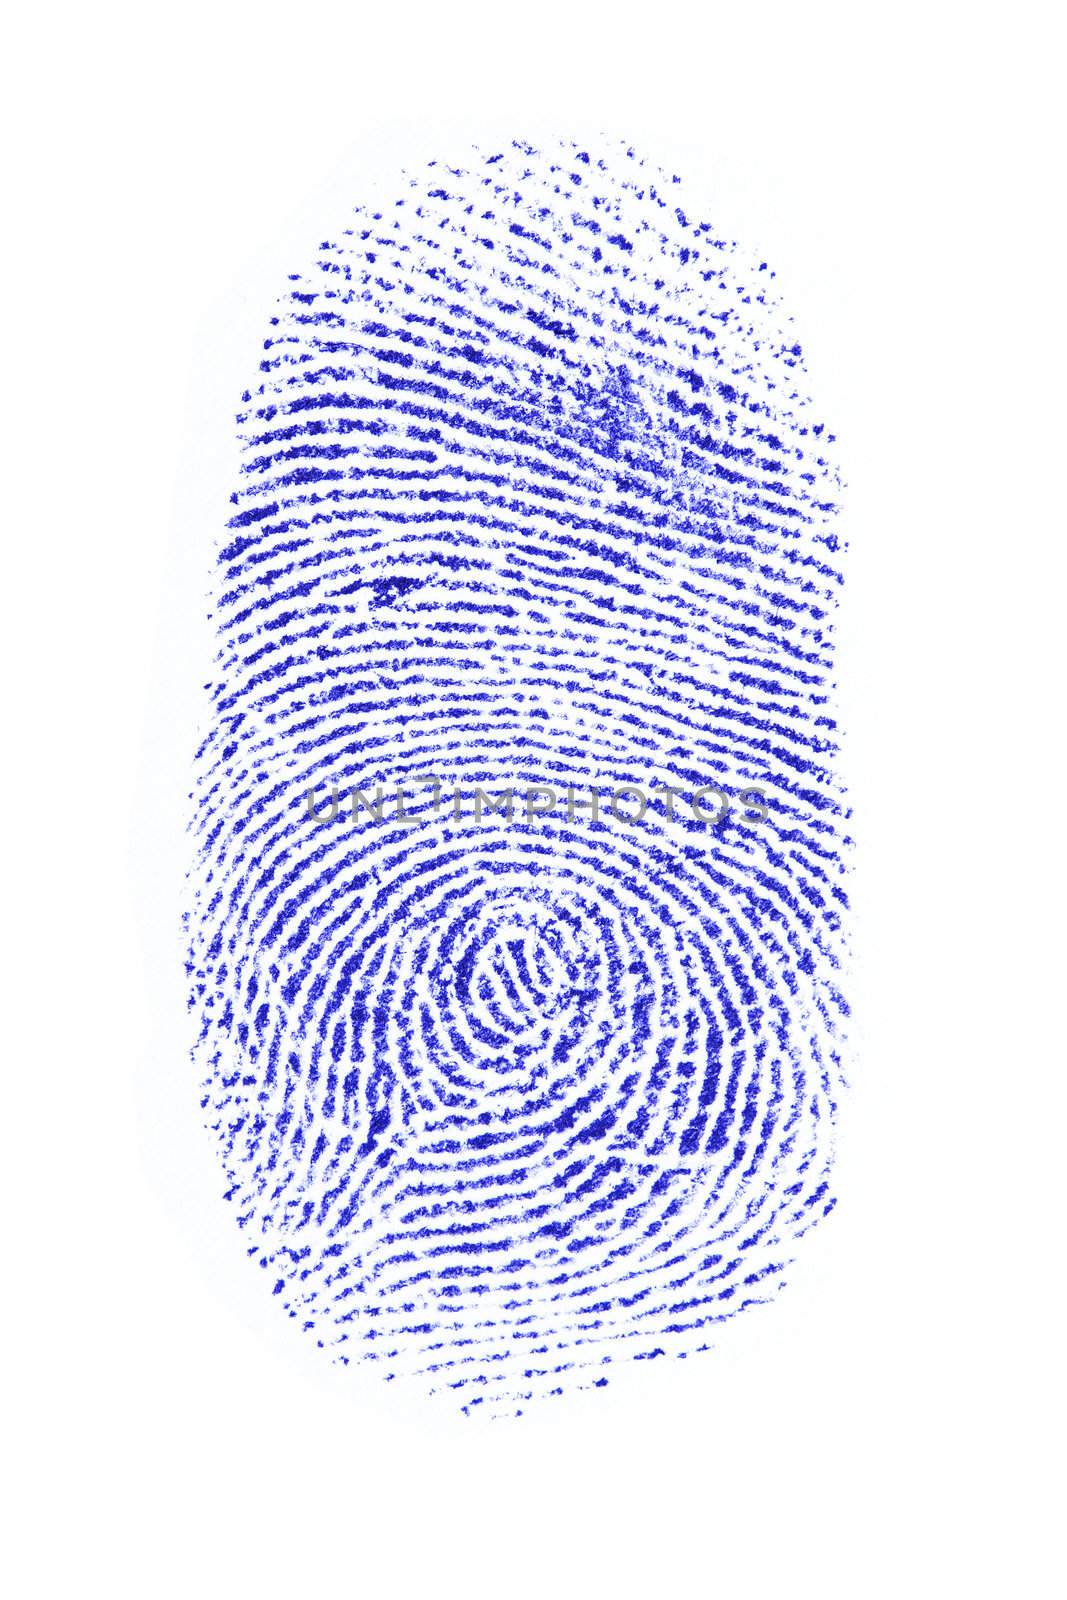 Fingerprint by sacatani